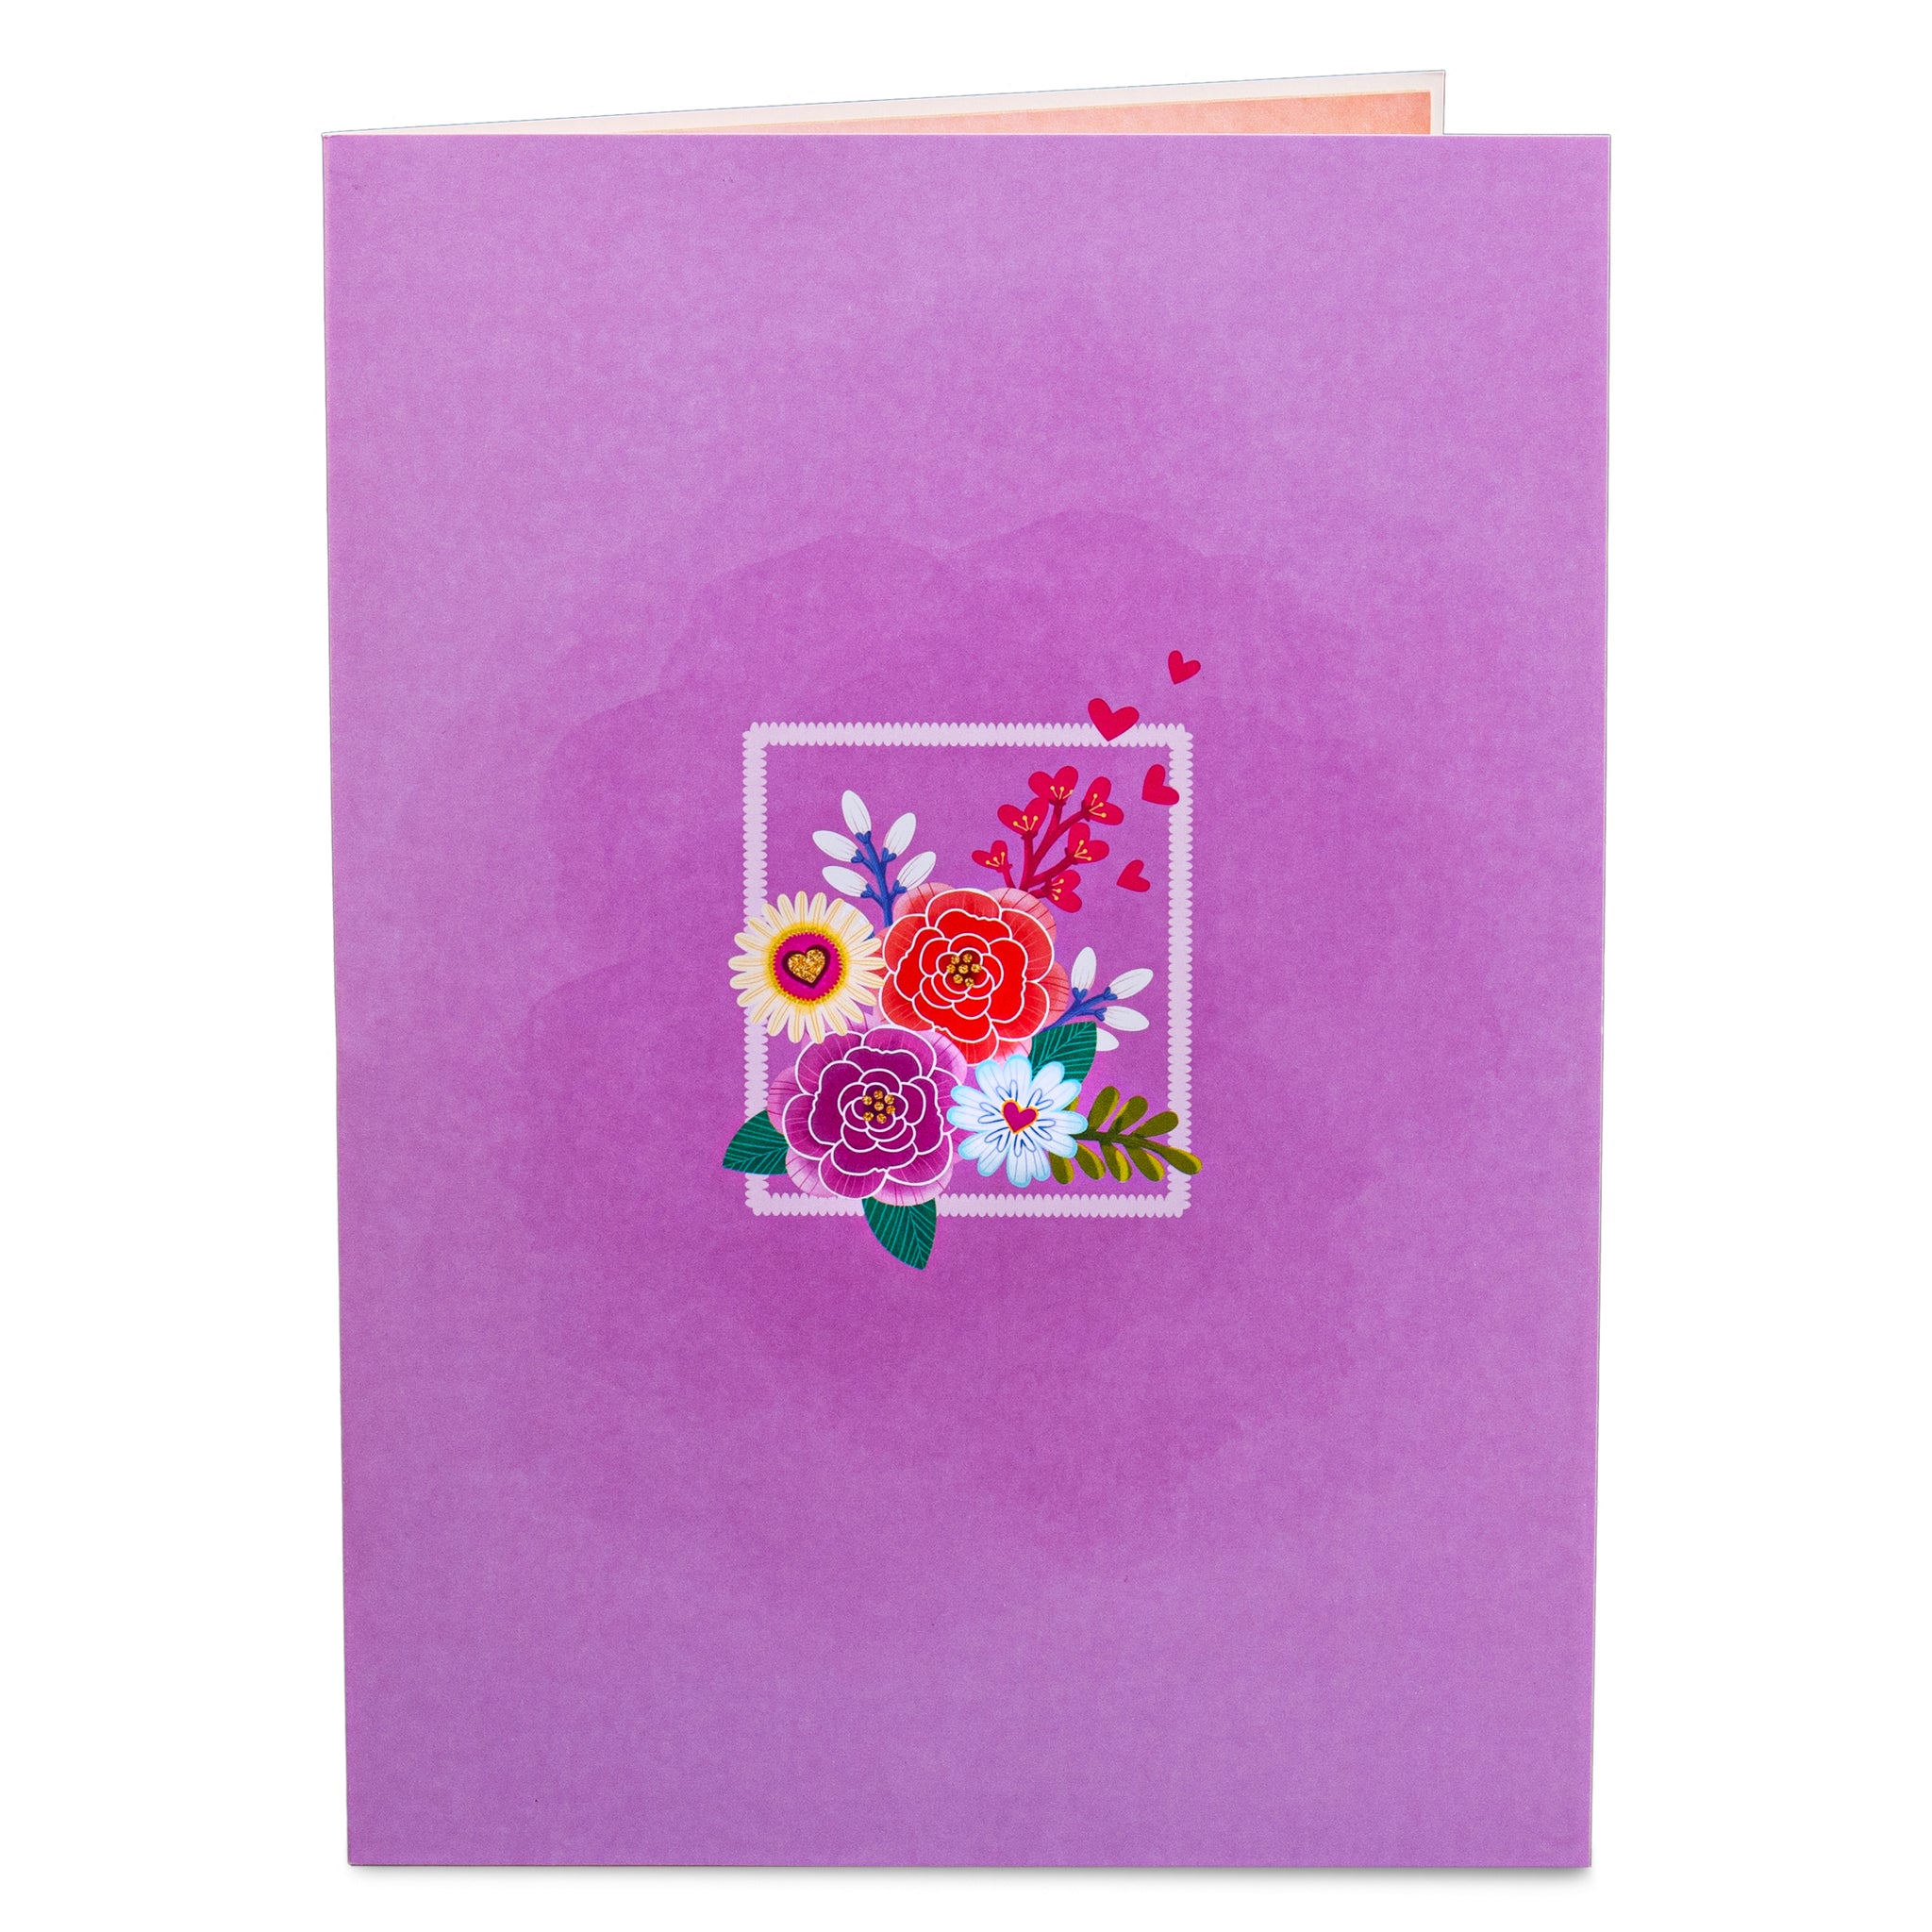 Floral Hugs GREETING CARDS SET - 18 Designs – iperartika